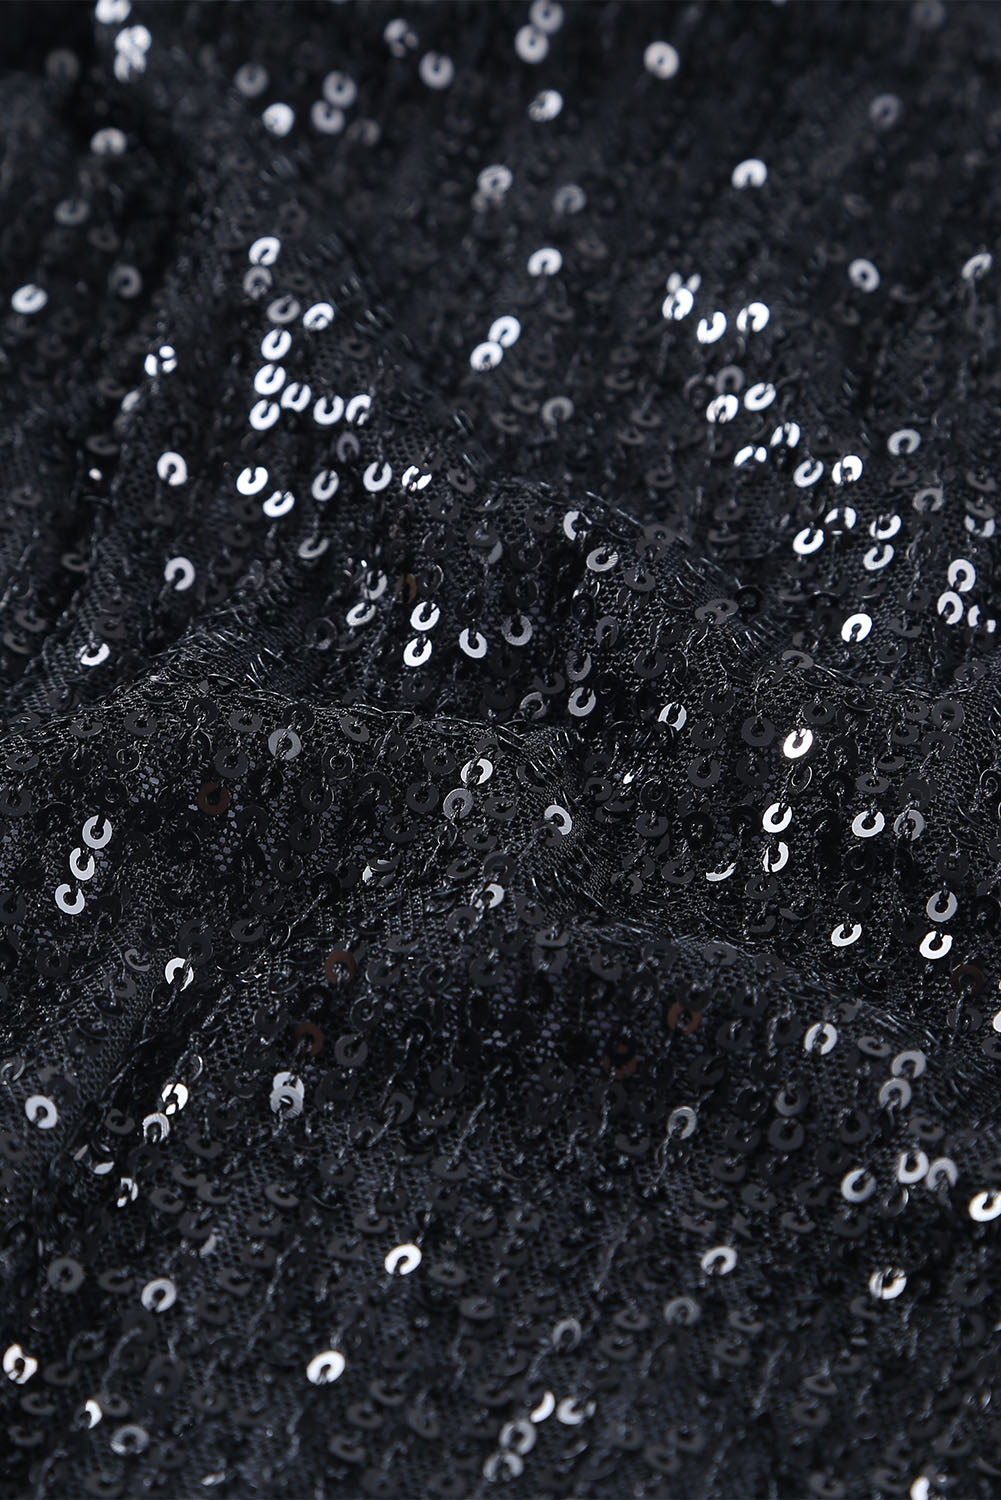 Black Slit Sleeves Sequin Dress - EBEPEX